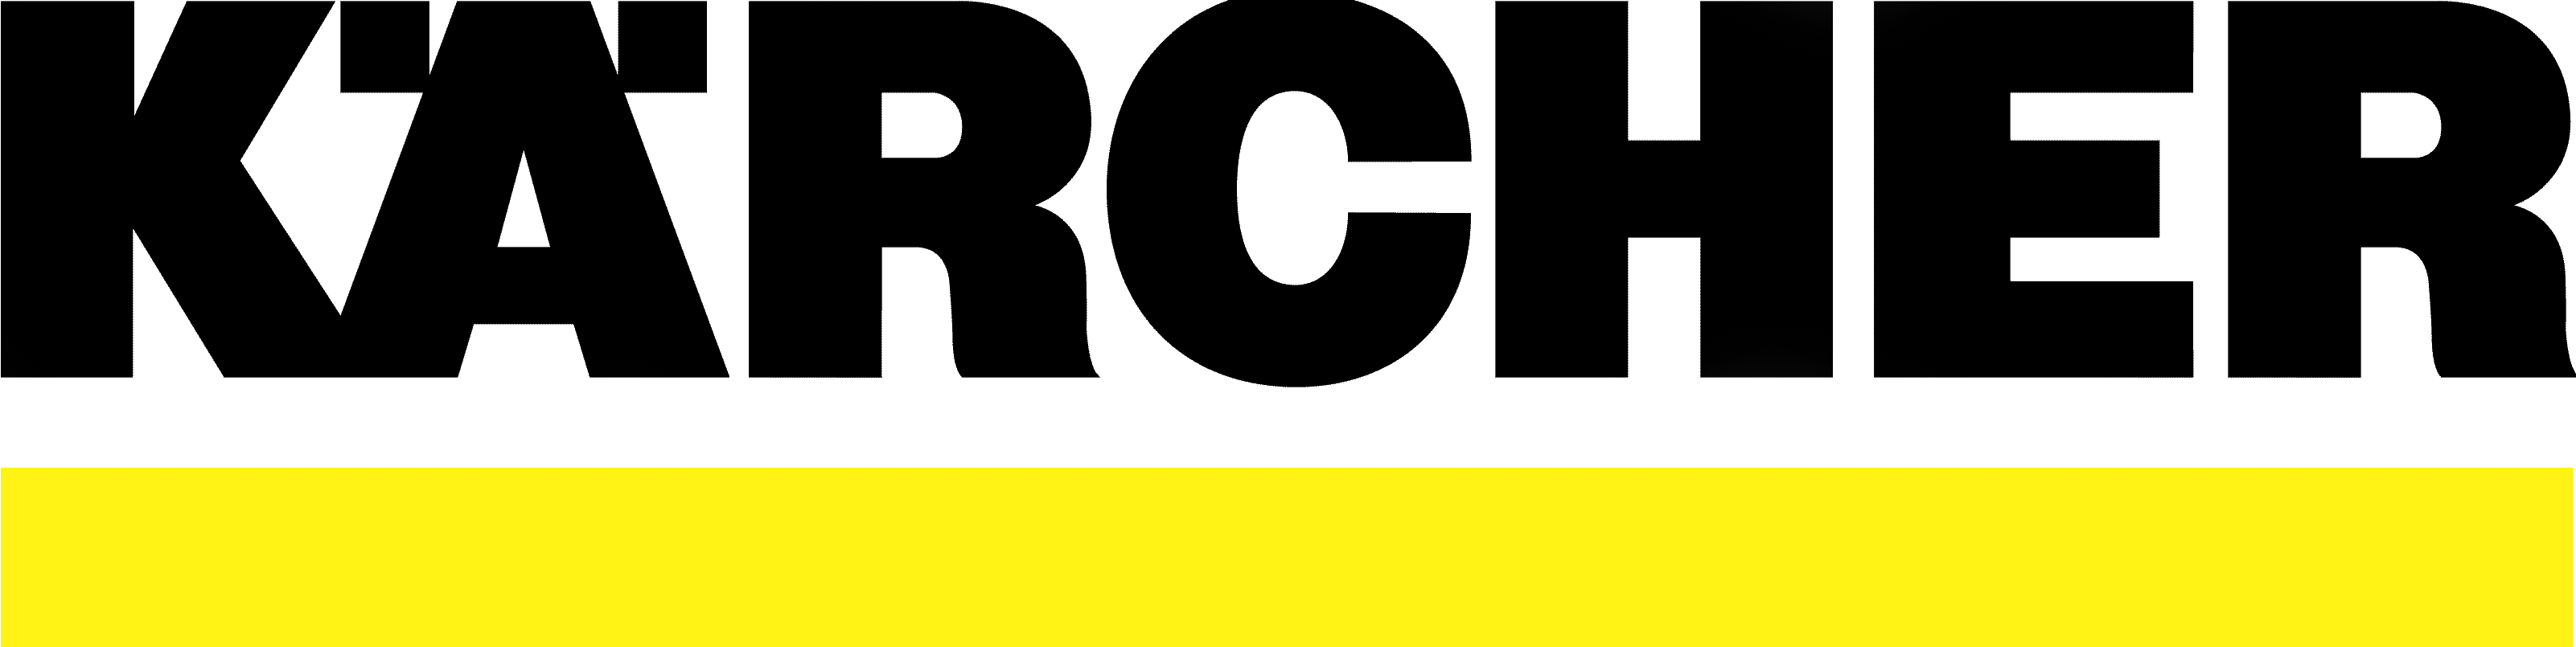 Kärcher Banner Logo